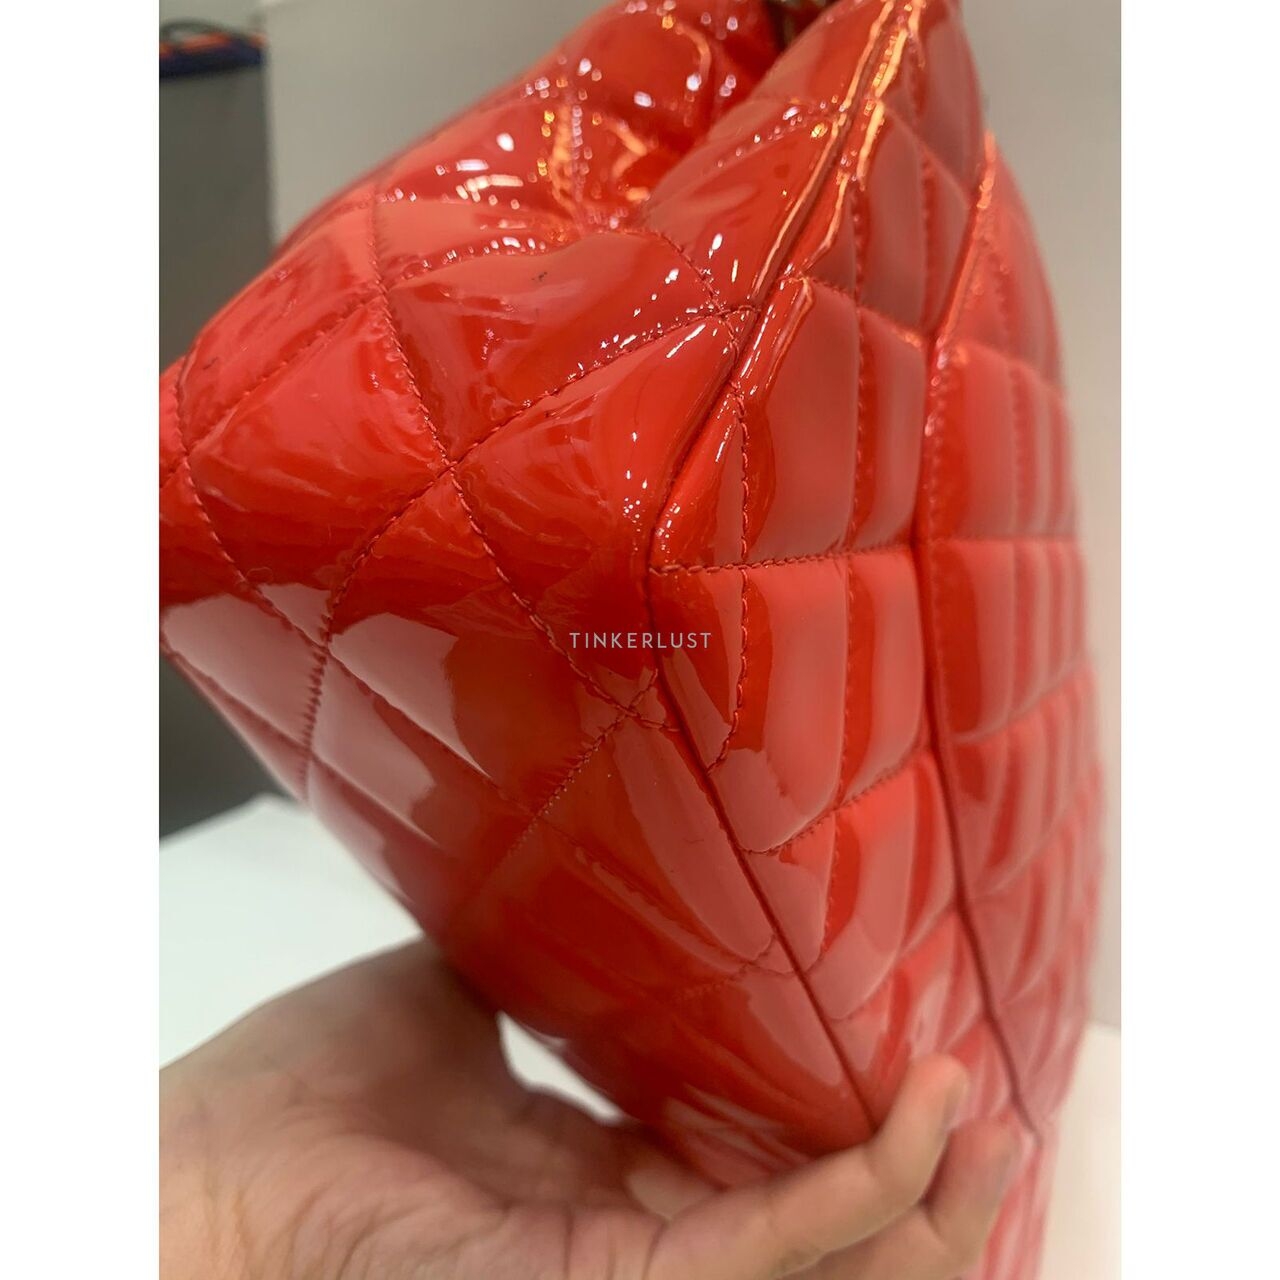 Chanel Jumbo Patent Pink Peach SHW #21 Shoulder Bag	